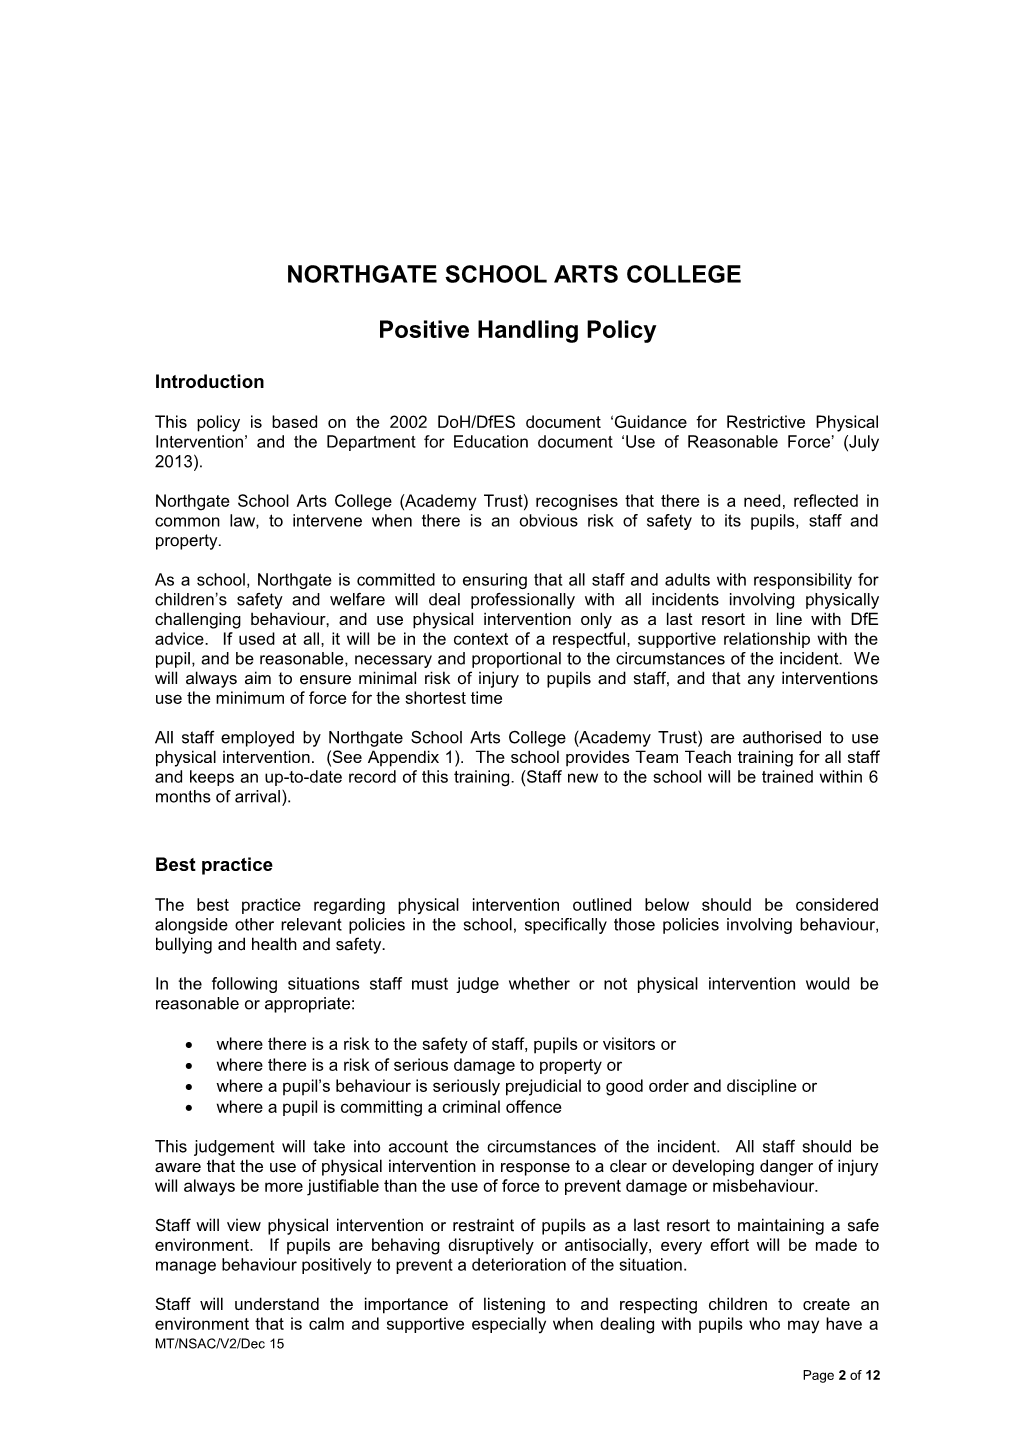 Northgate School Arts College